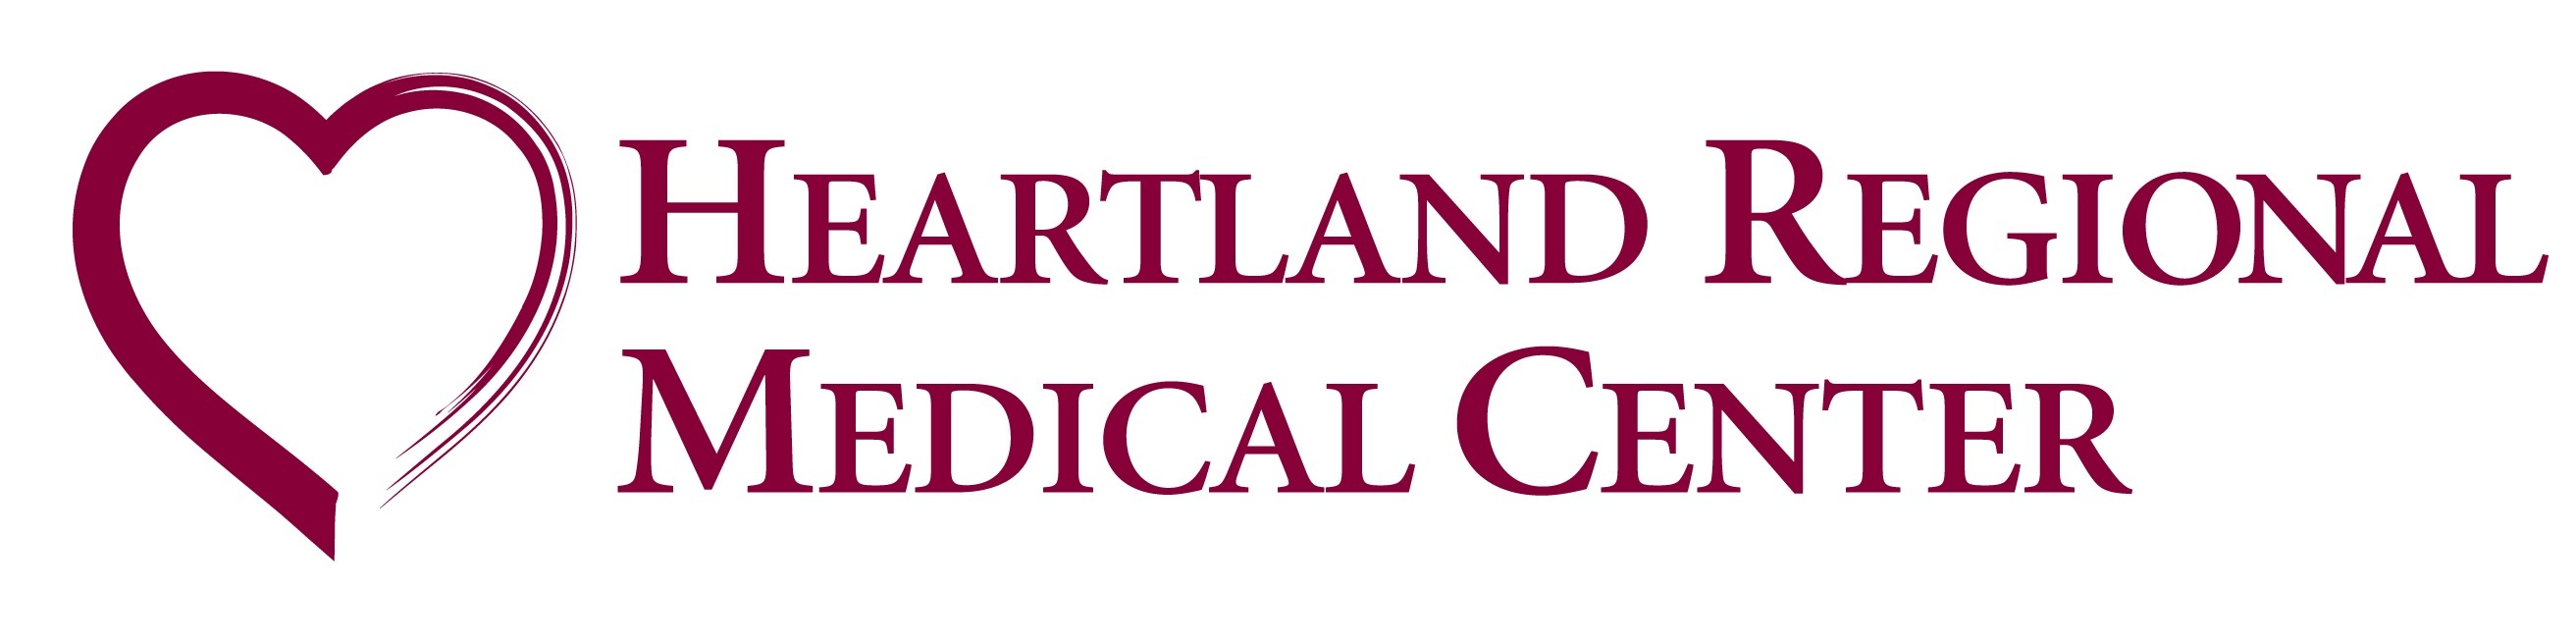 Heartland Regional Medical Center logo